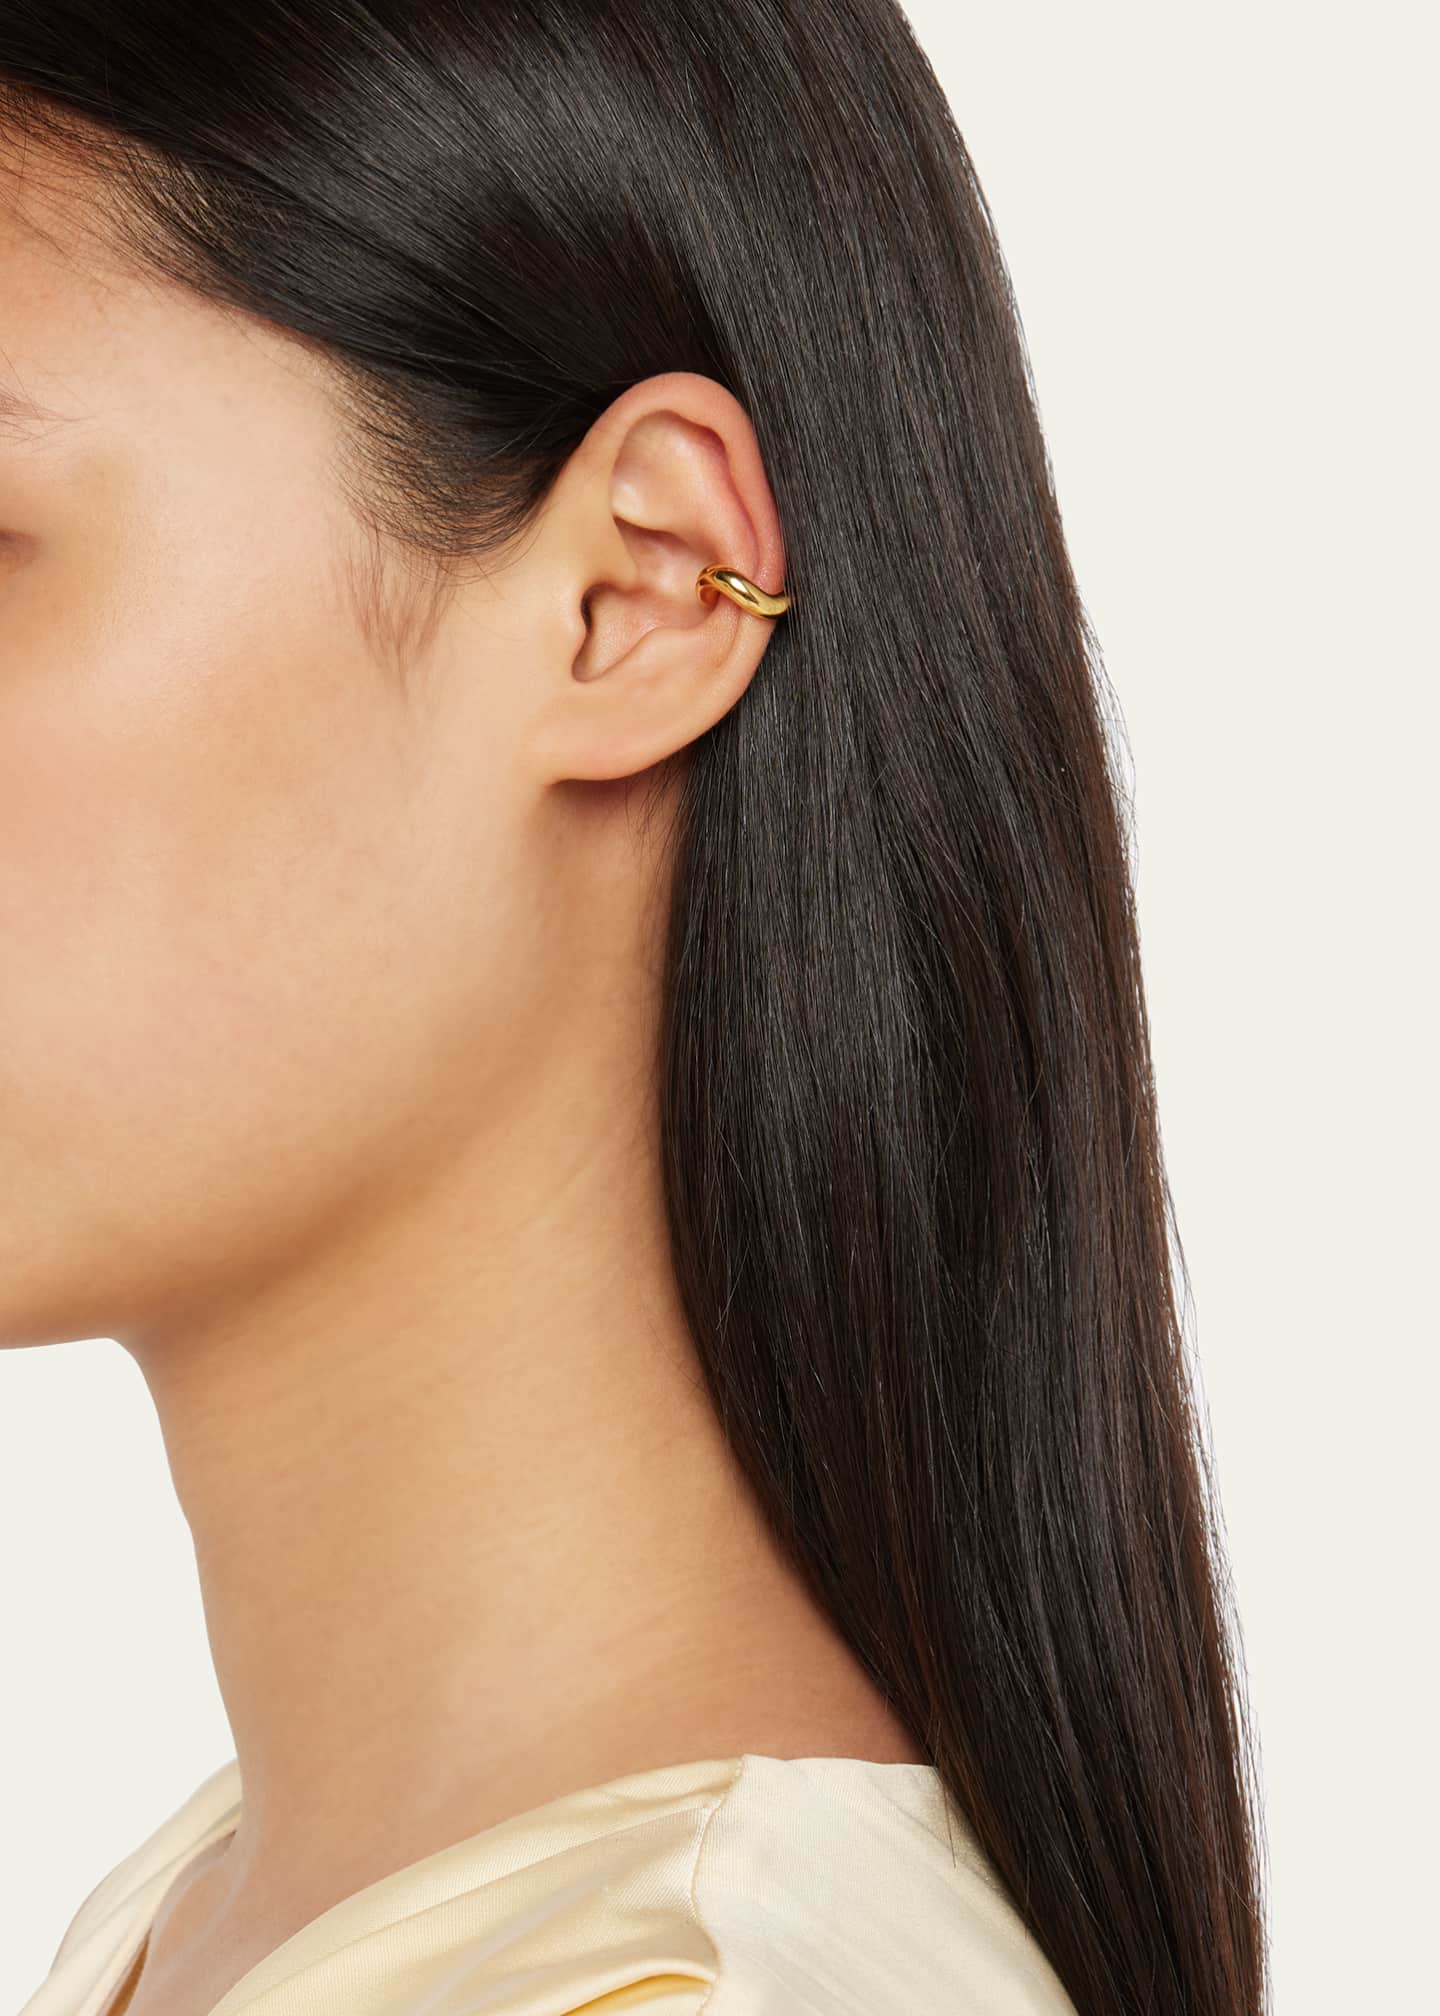 Charlotte Chesnais Gold Vermeil Wave Ear Cuff - Bergdorf Goodman